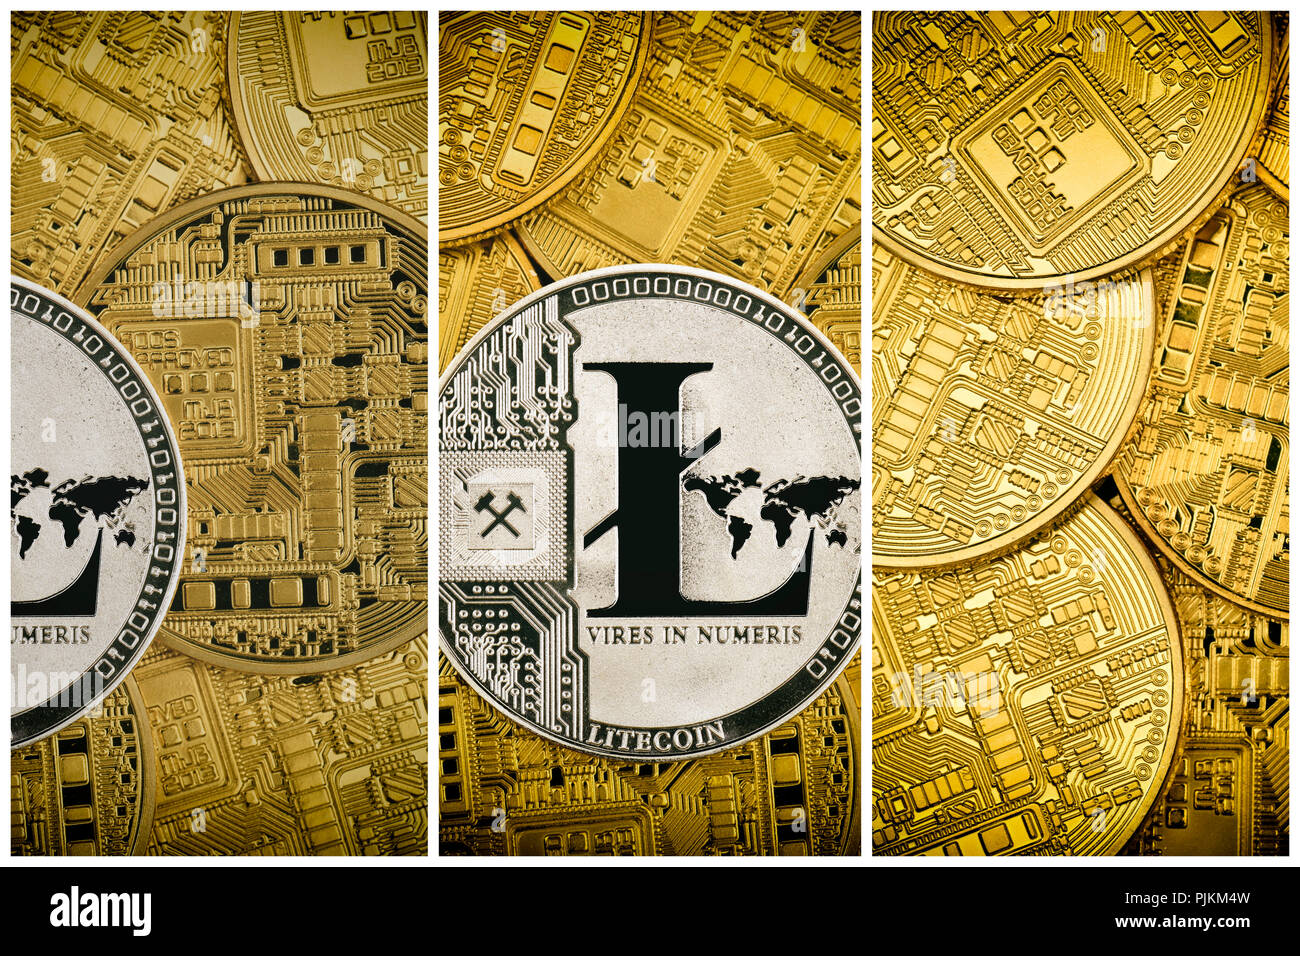 Imagen simbólica de la moneda digital, moneda de plata litecoin entre monedas físicas de oro Foto de stock